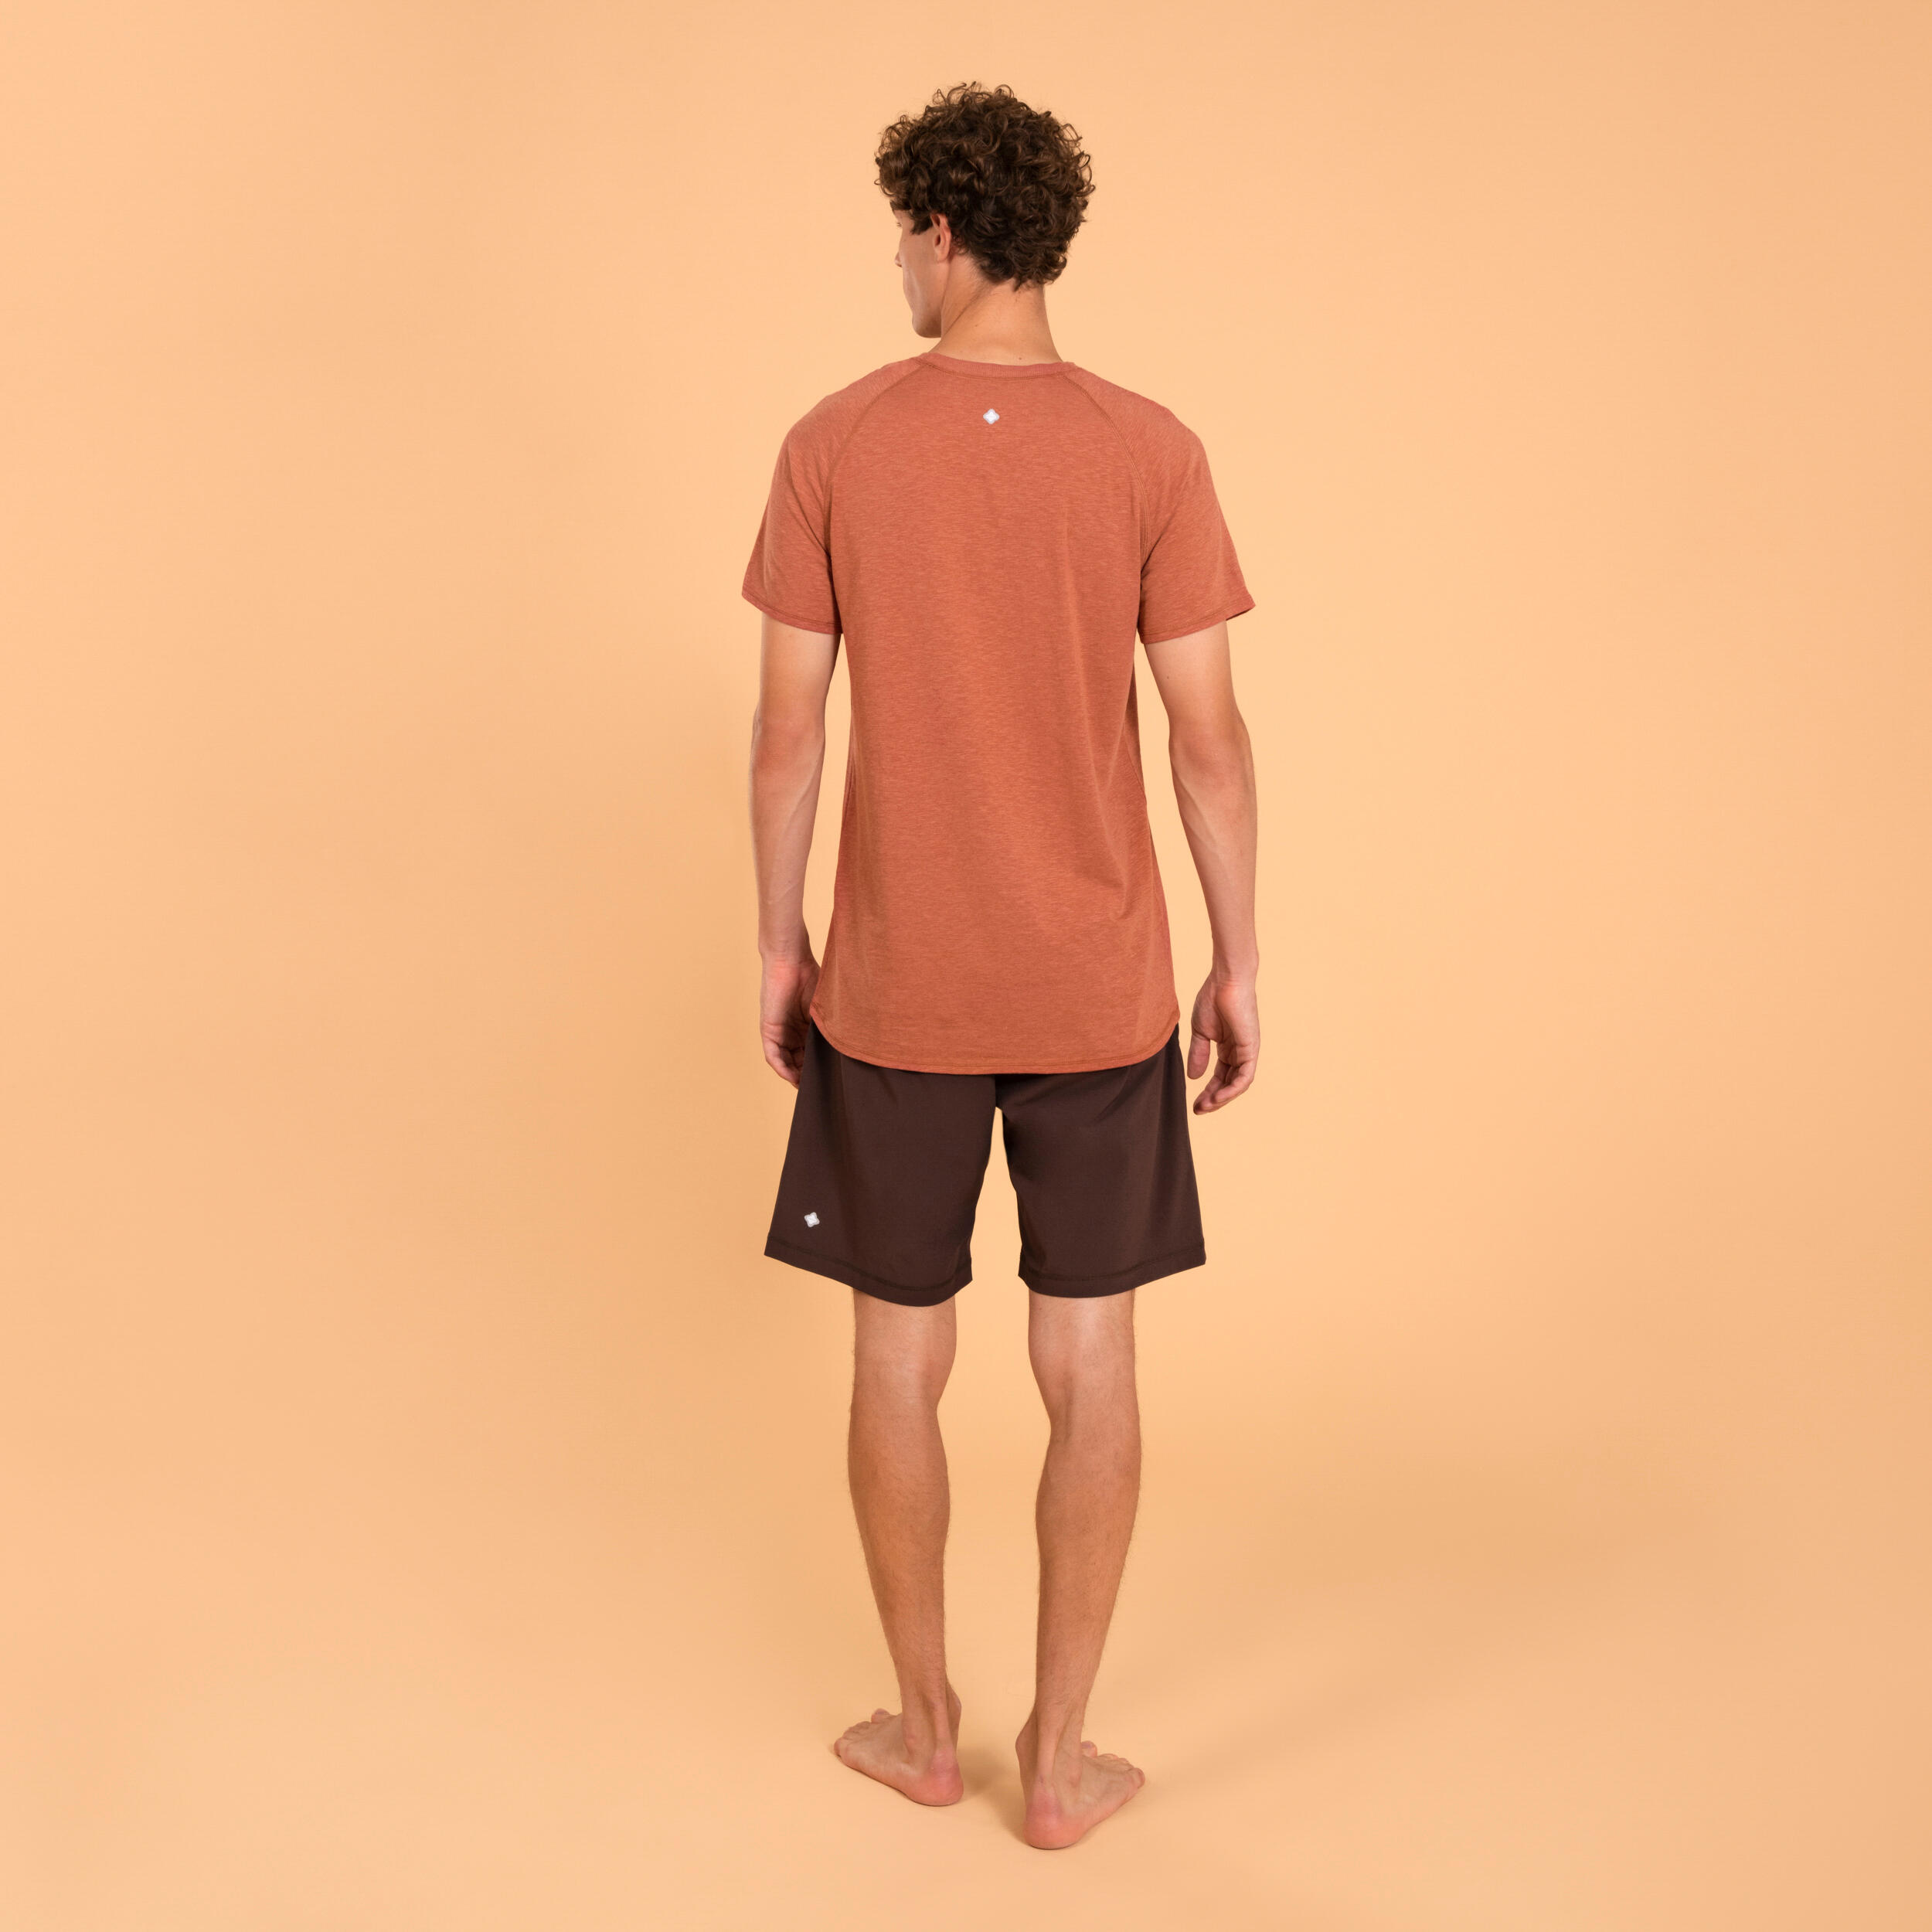 Men's Short-Sleeved Gentle Yoga T-Shirt in Natural Fabric - Terracotta 5/5